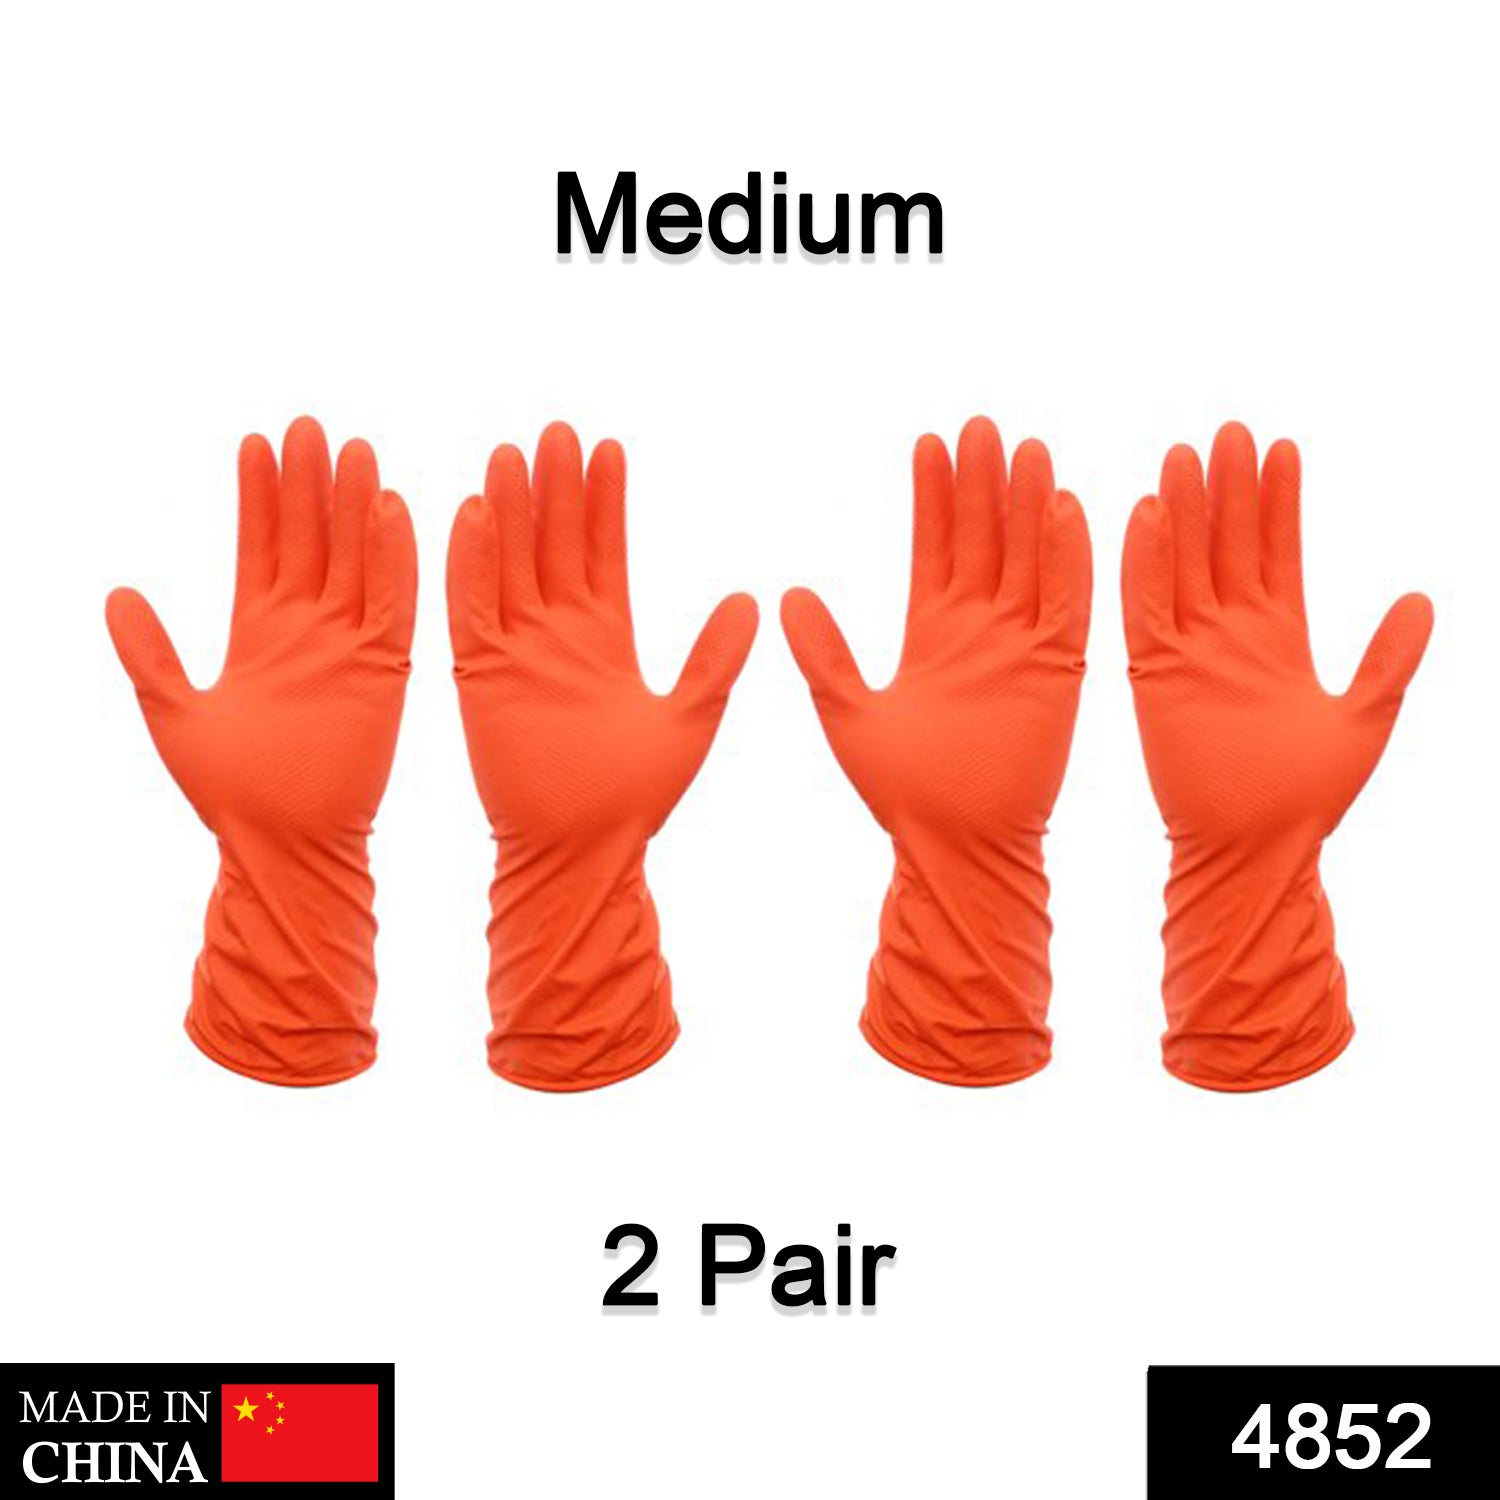 4852 2 Pair Medium Orange  Gloves For Types Of Purposes Like Washing Utensils, Gardening And Cleaning Toilet Etc. 